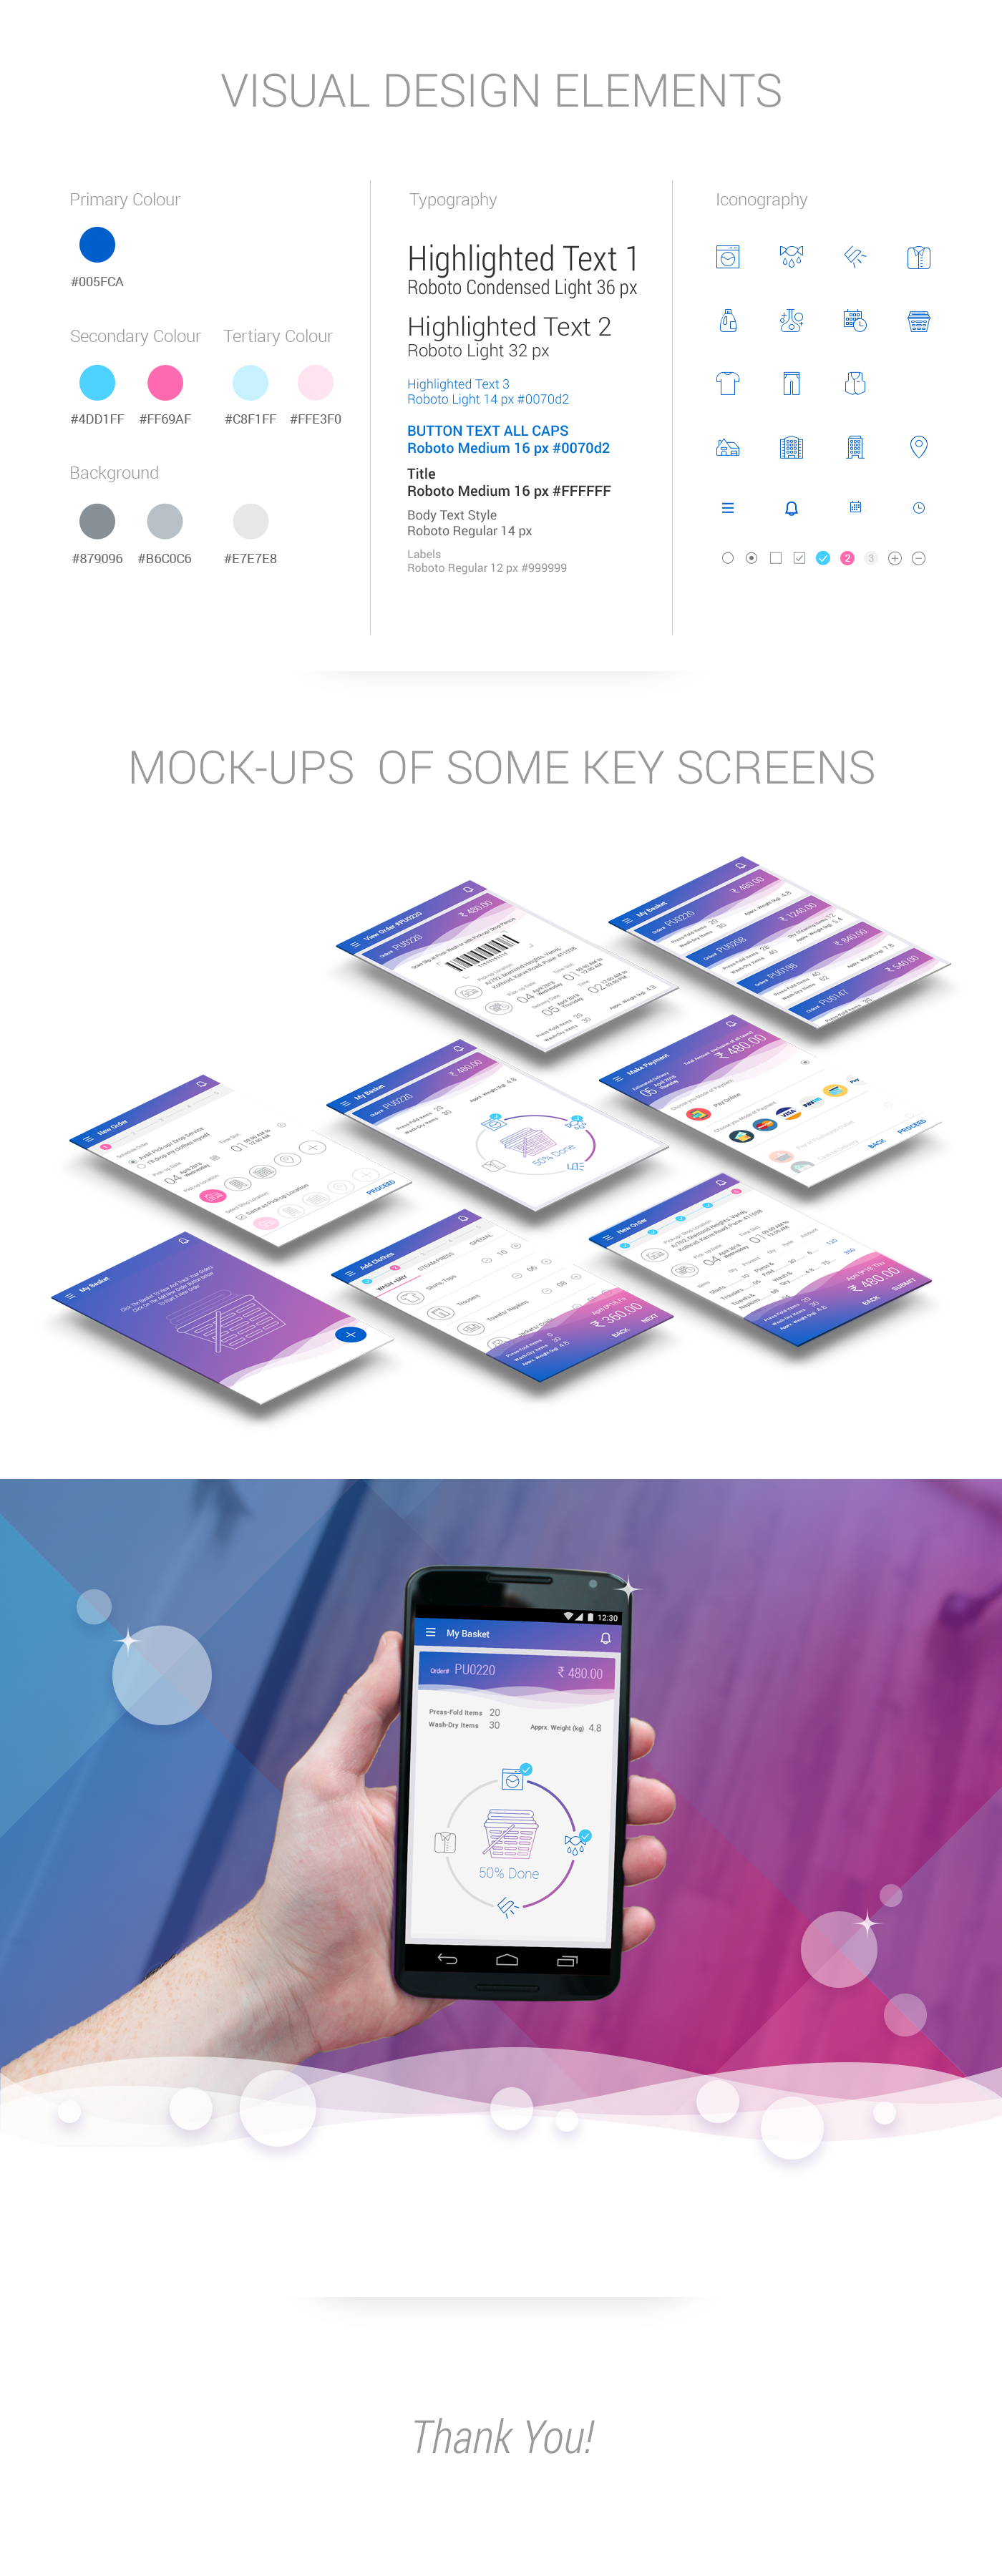 Laundro-mat service UI ux visual design Interaction design  mobile